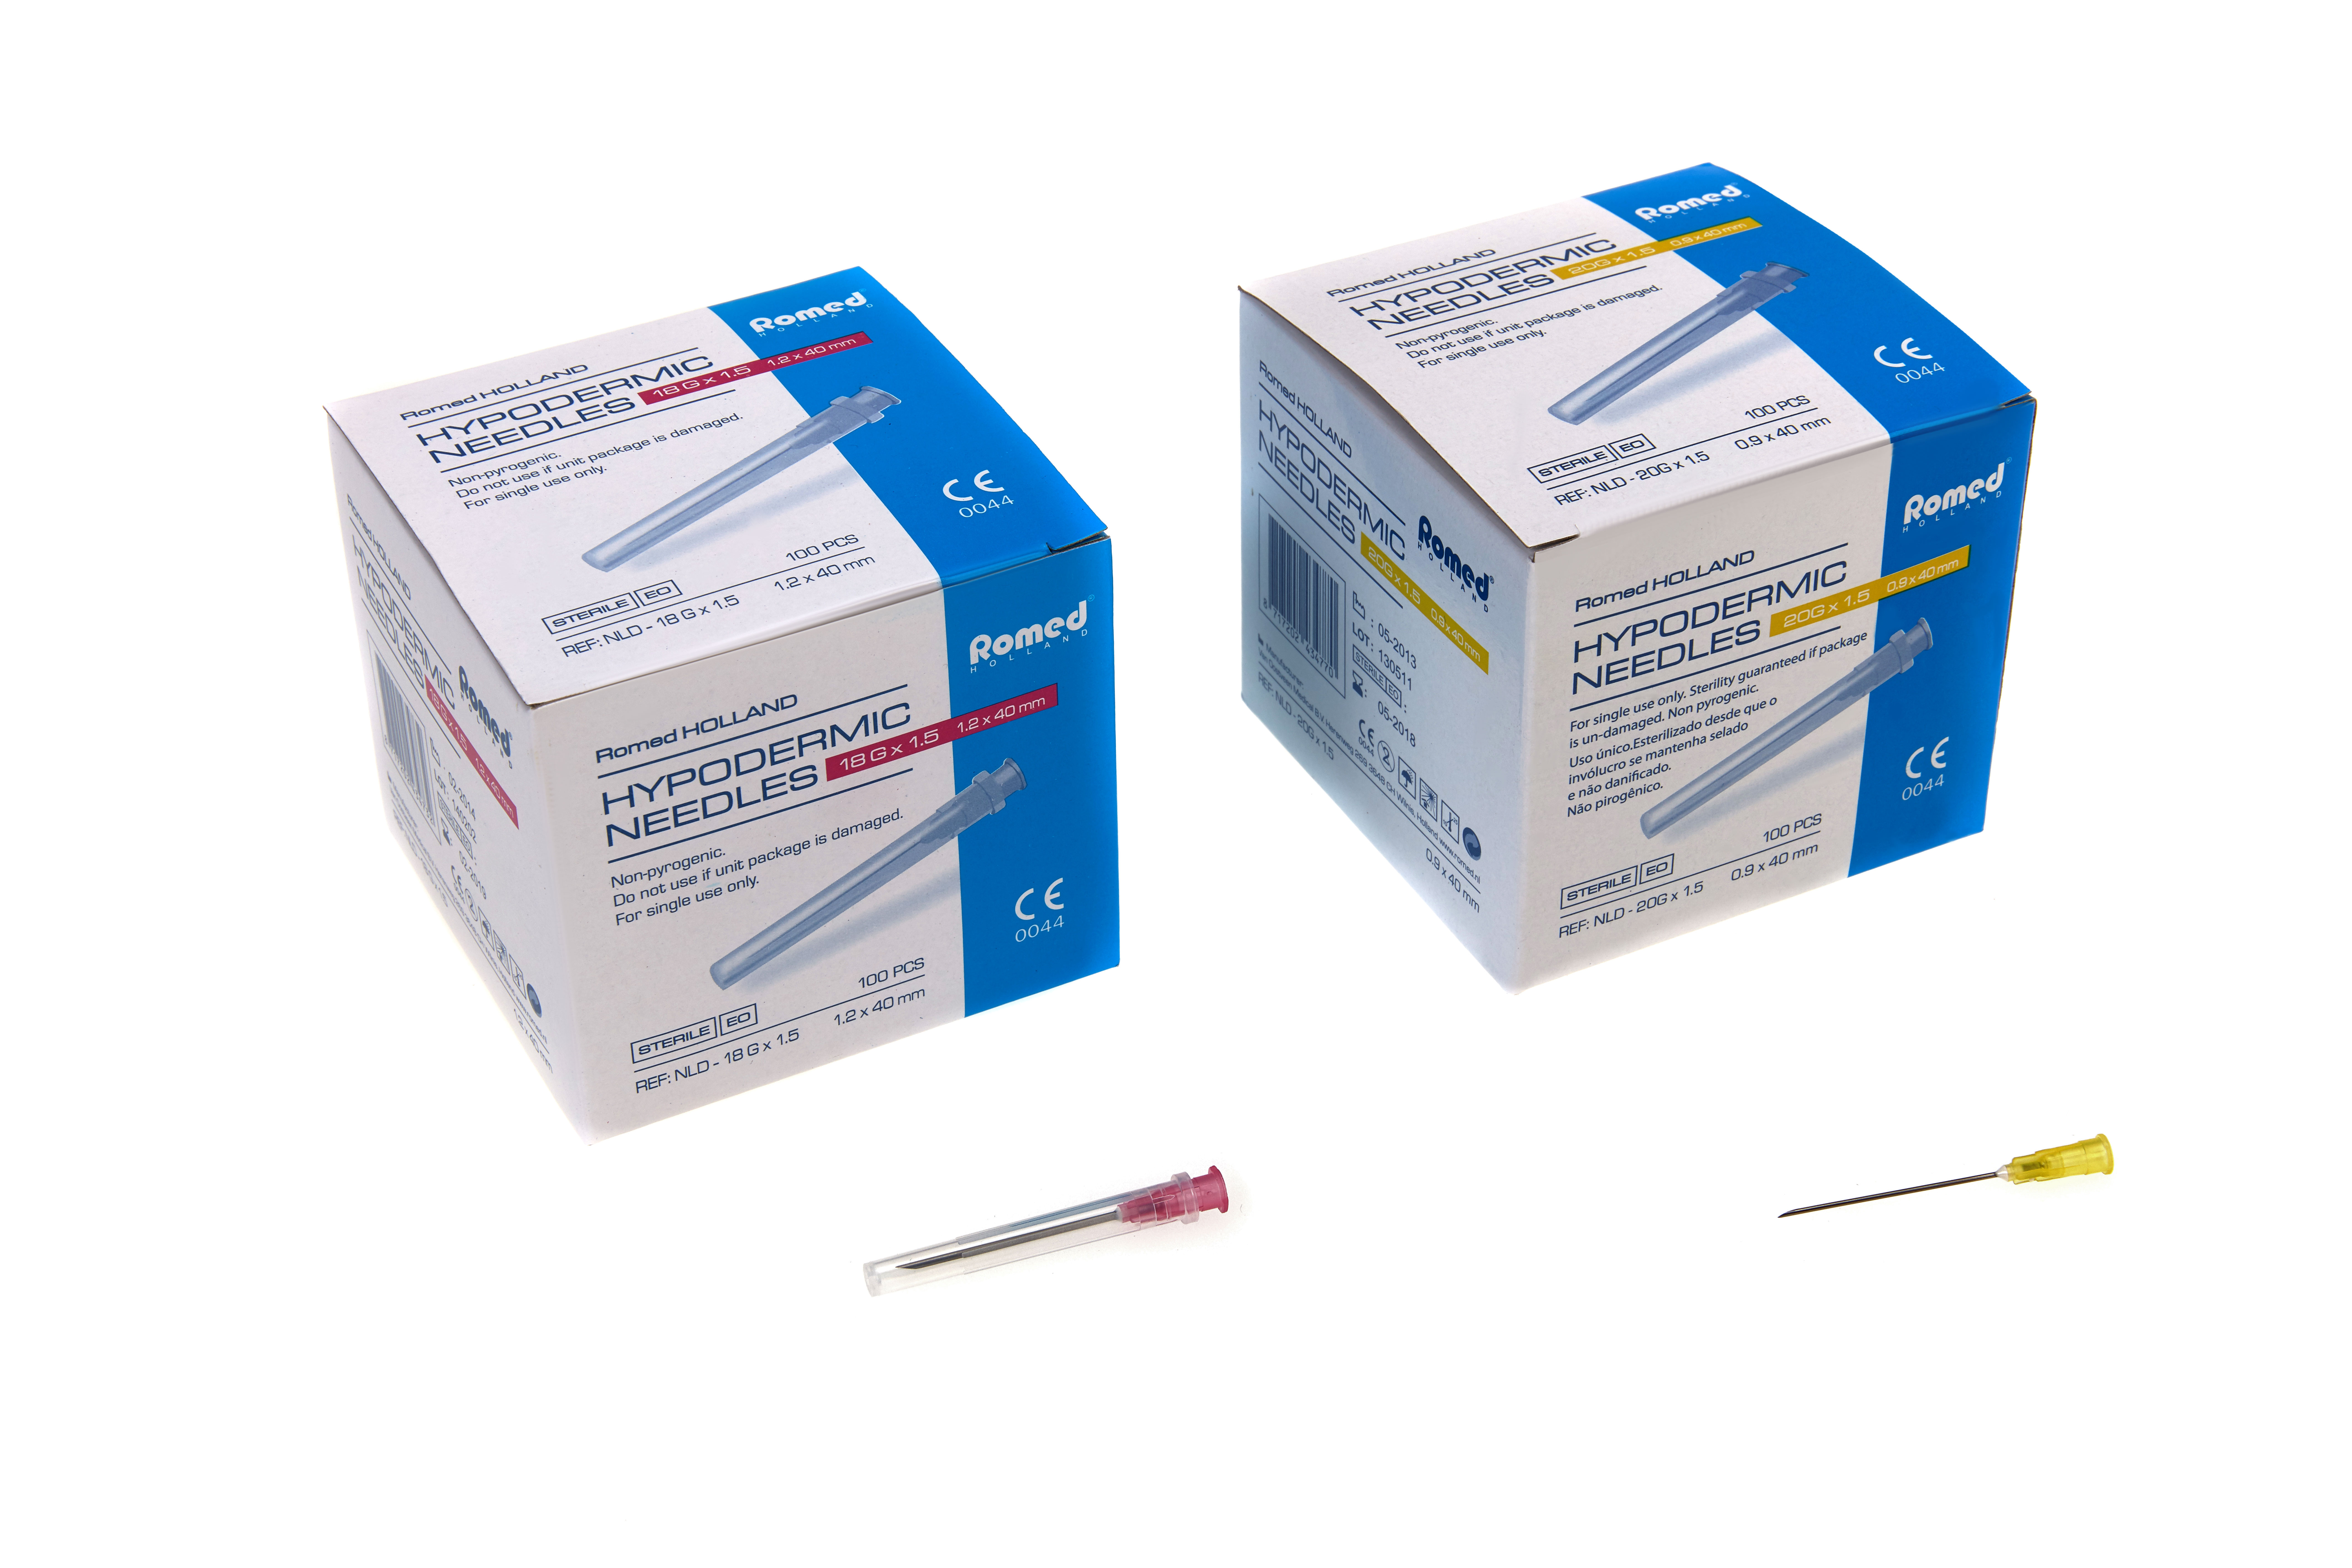 NLD-21GX1 Romed hypodermic needles, 21gx1", sterile per piece, 100 pcs in an inner box, 50 x 100 pcs = 5.000 pcs in a carton.